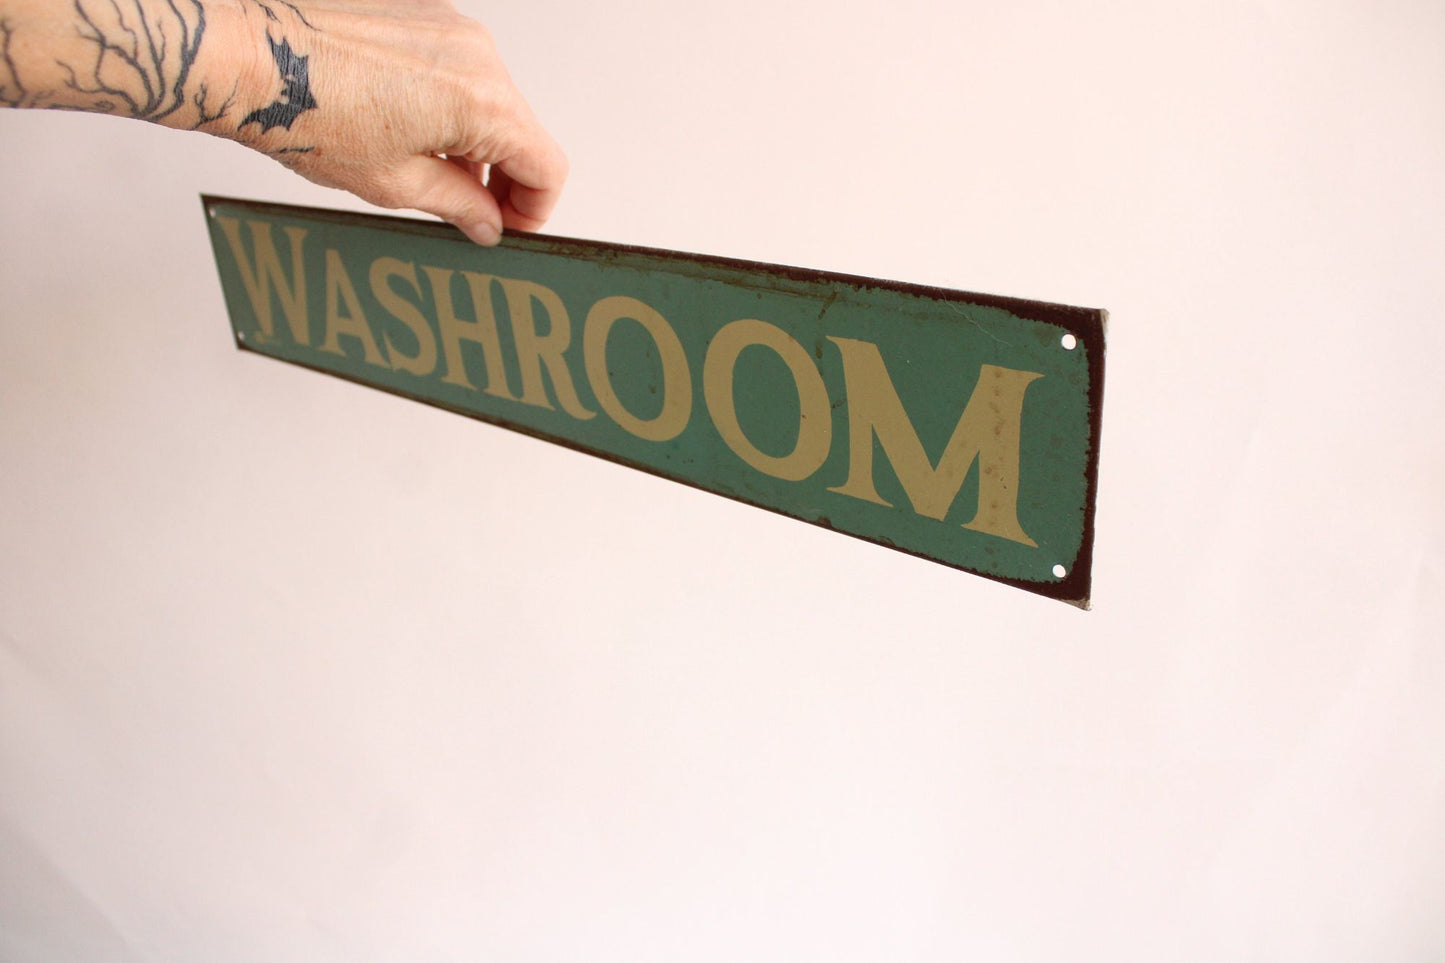 Vintage 2000s Metal Washroom Sign